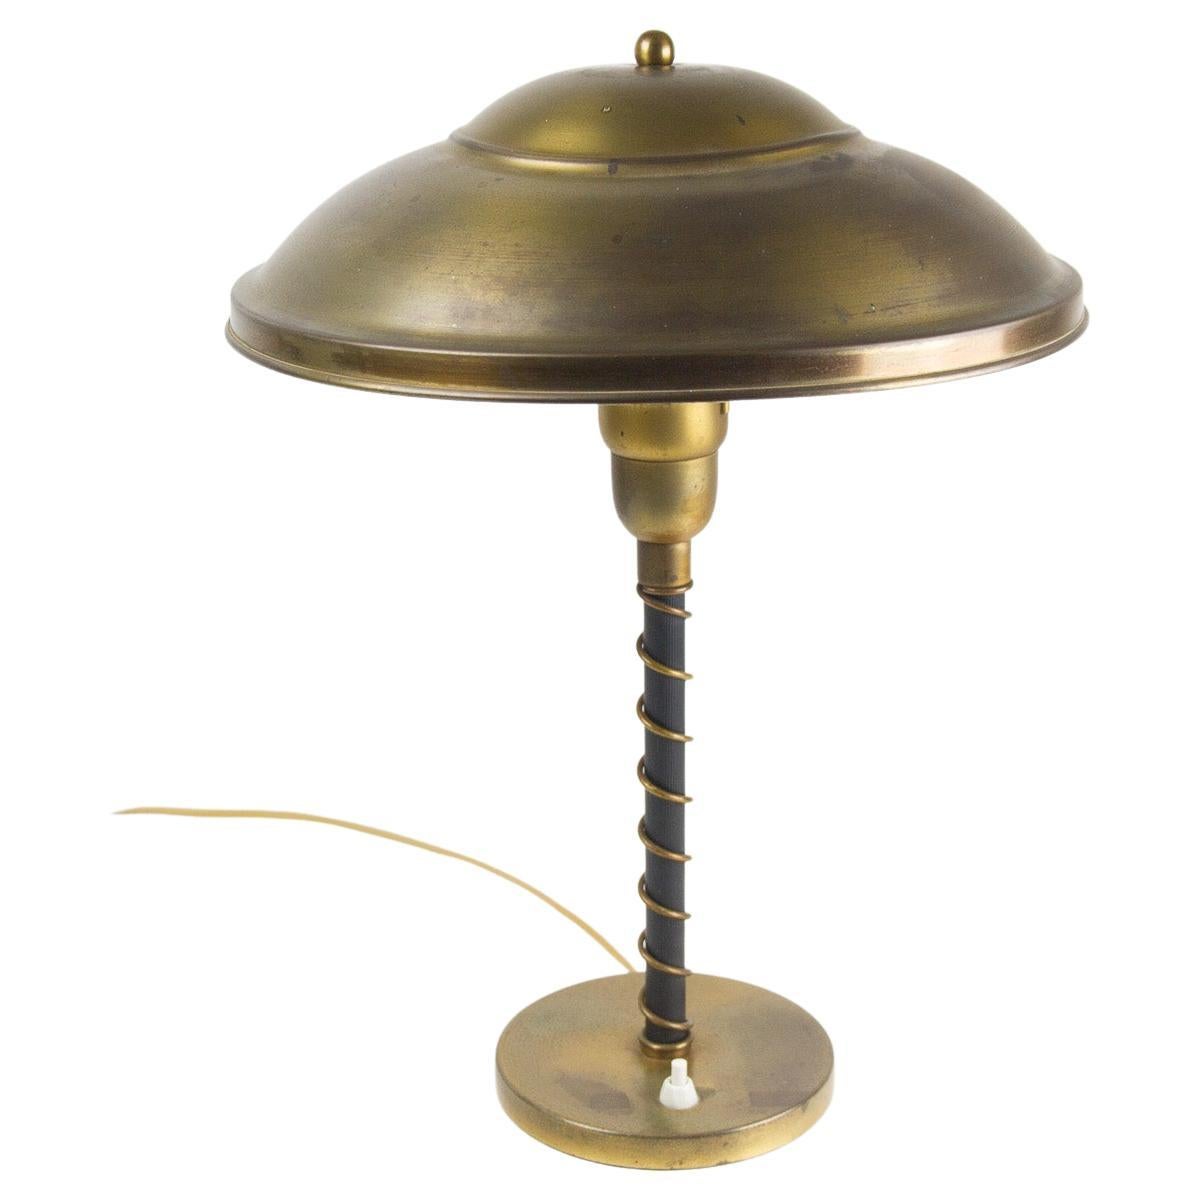 Danish Art Deco Brass Table Lamp, 1930s.